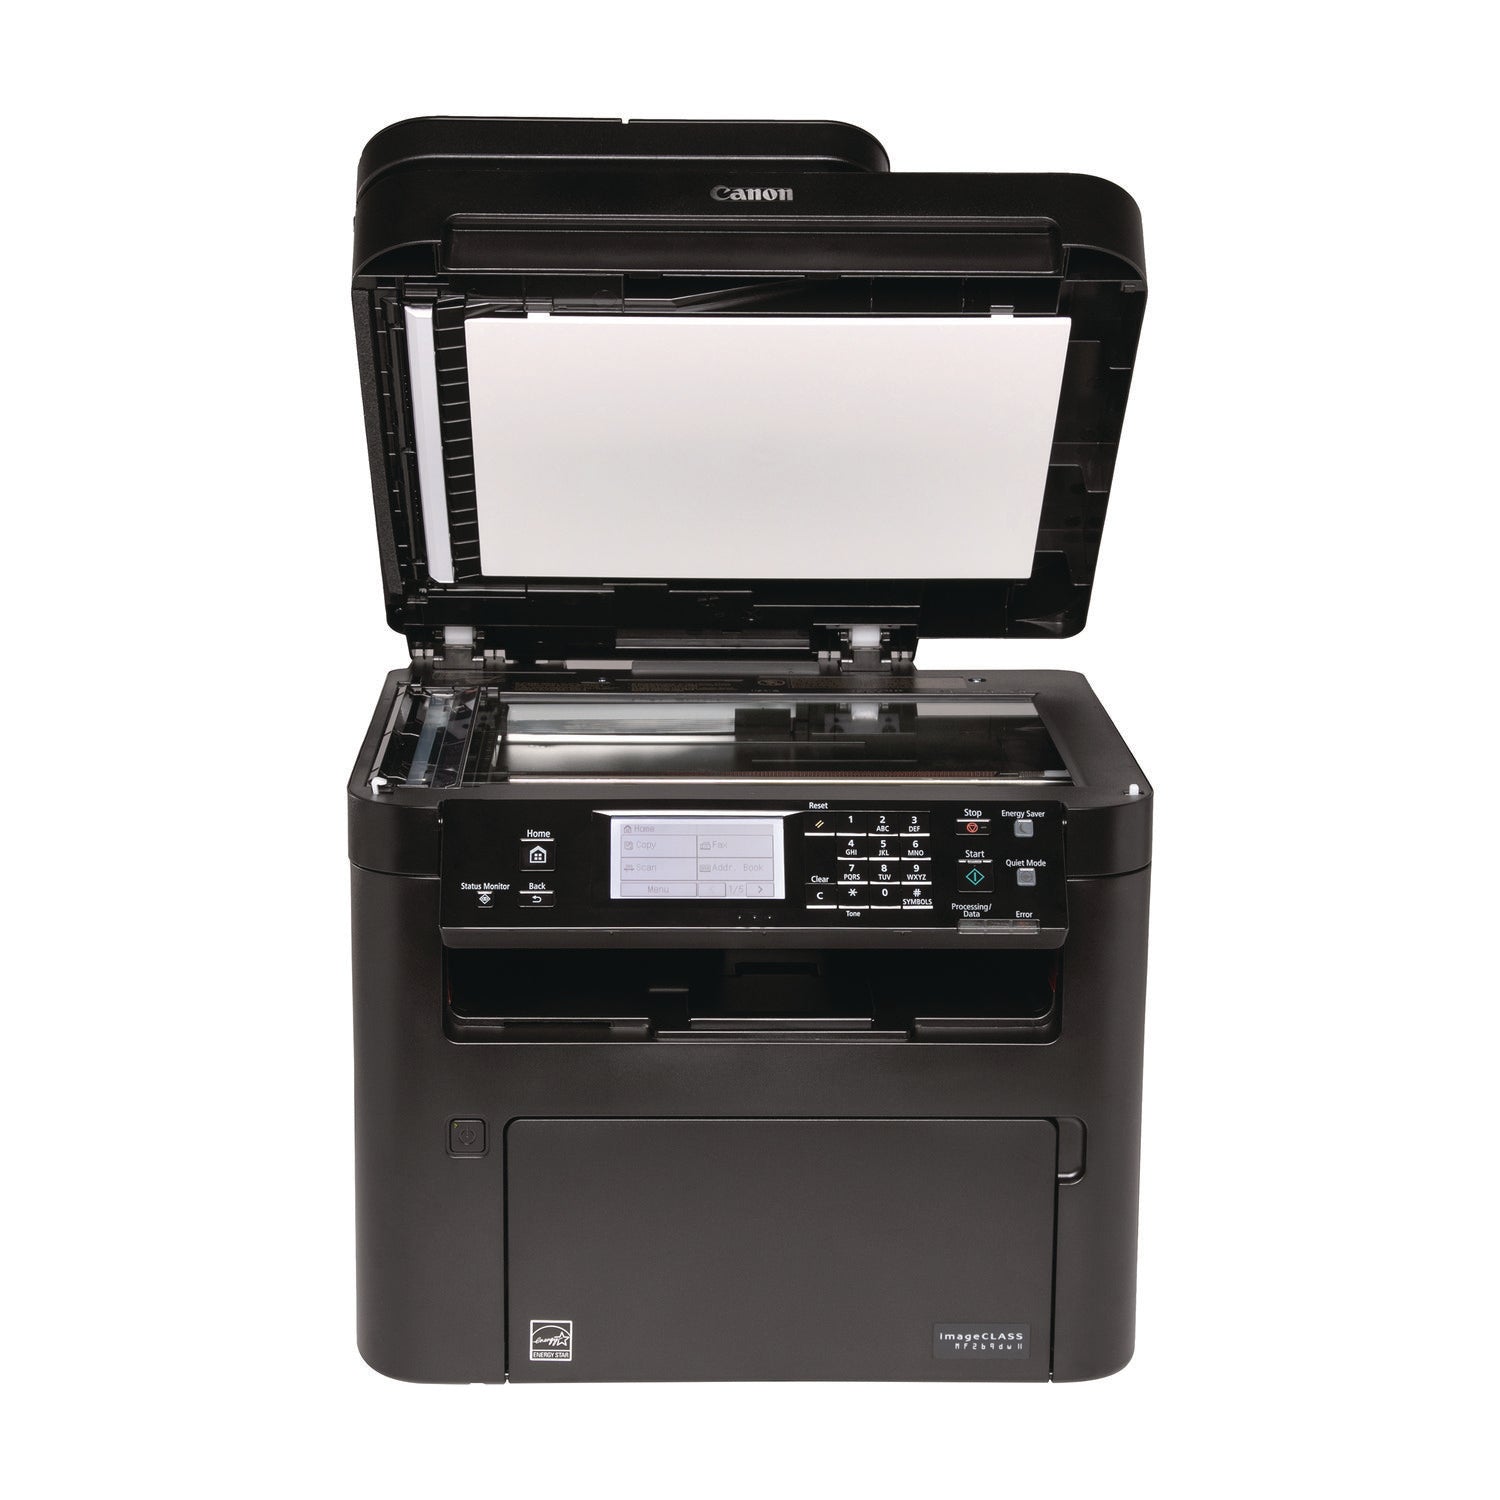 imageclass-mf269dw-ii-wireless-multifunction-laser-printer-copy-fax-print-scan_cnm5938c005 - 8